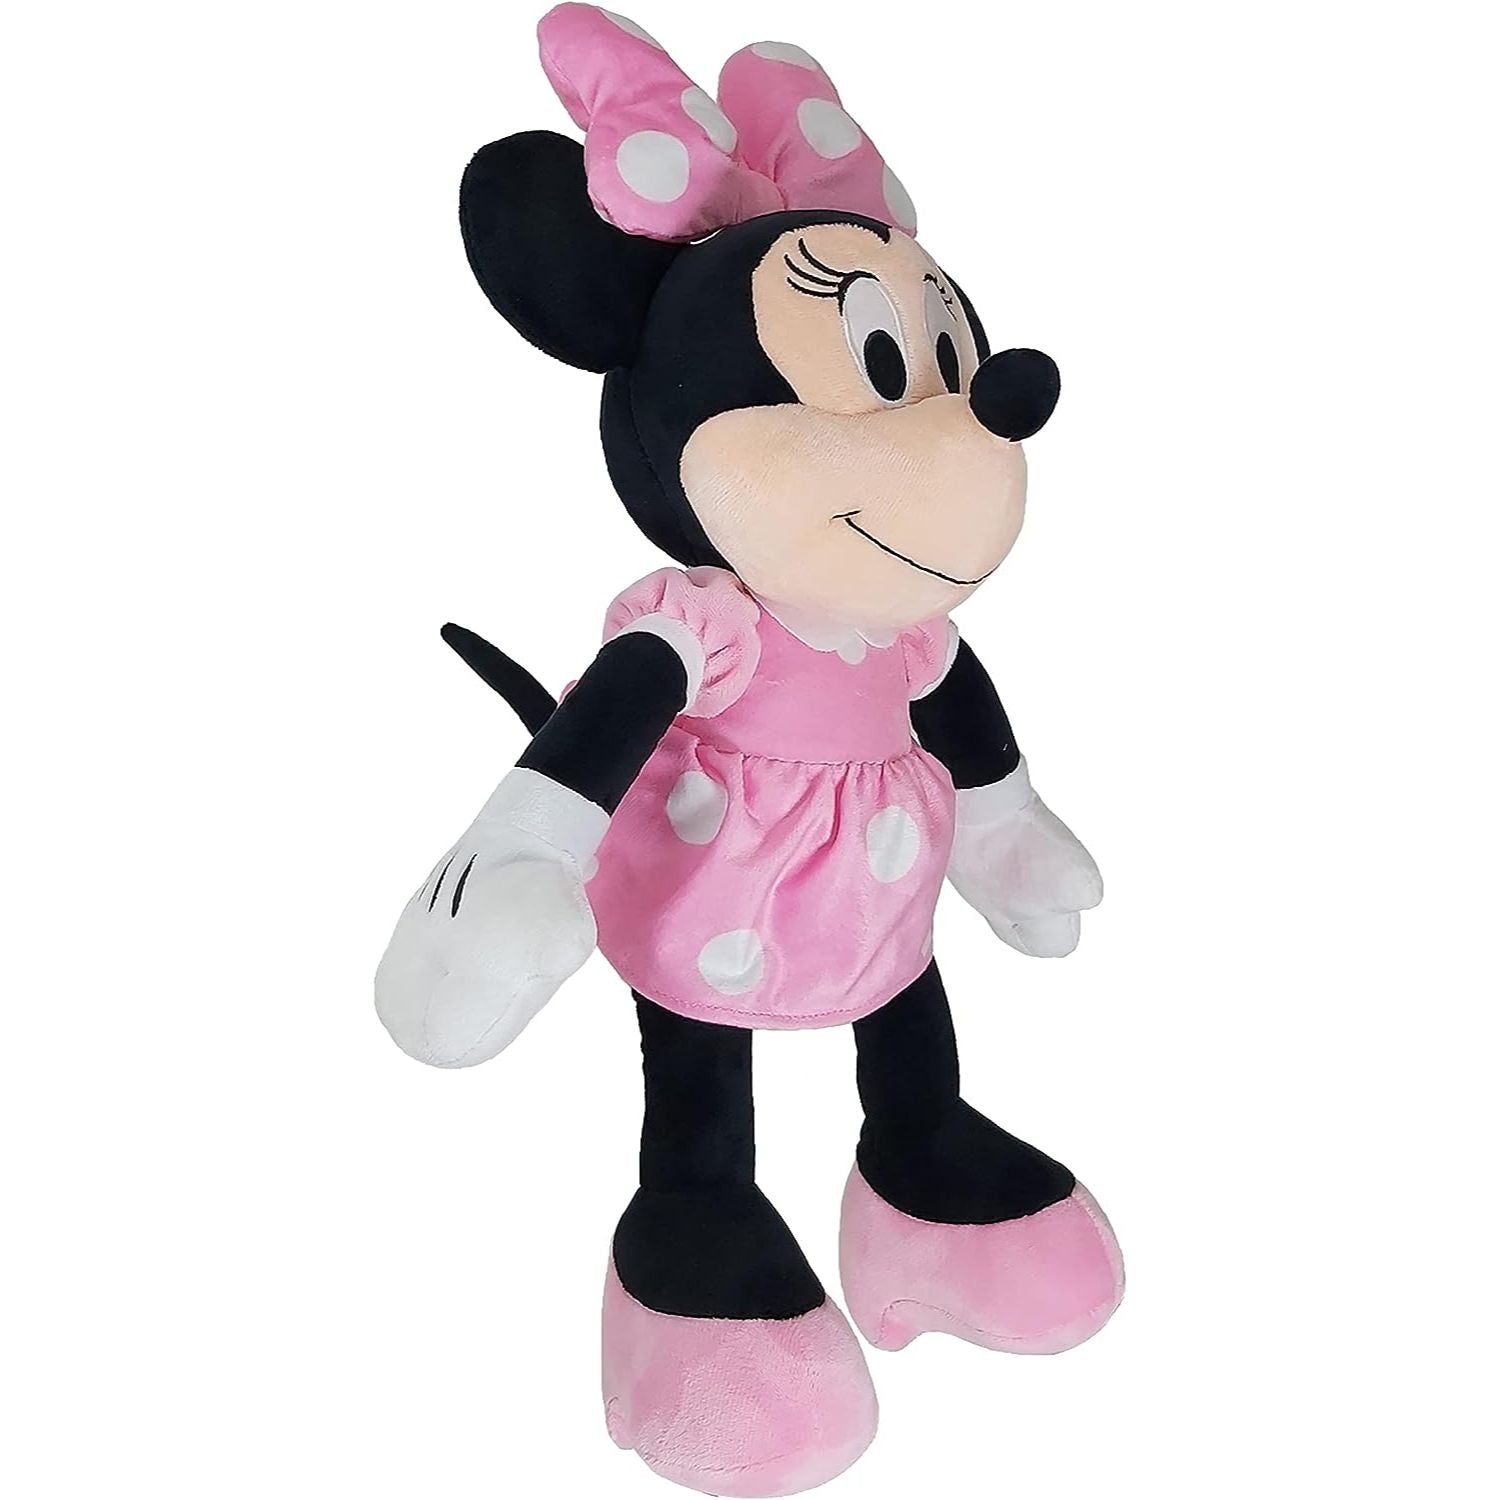 Disney Minnie Mouse plush side view - Heretoserveyou